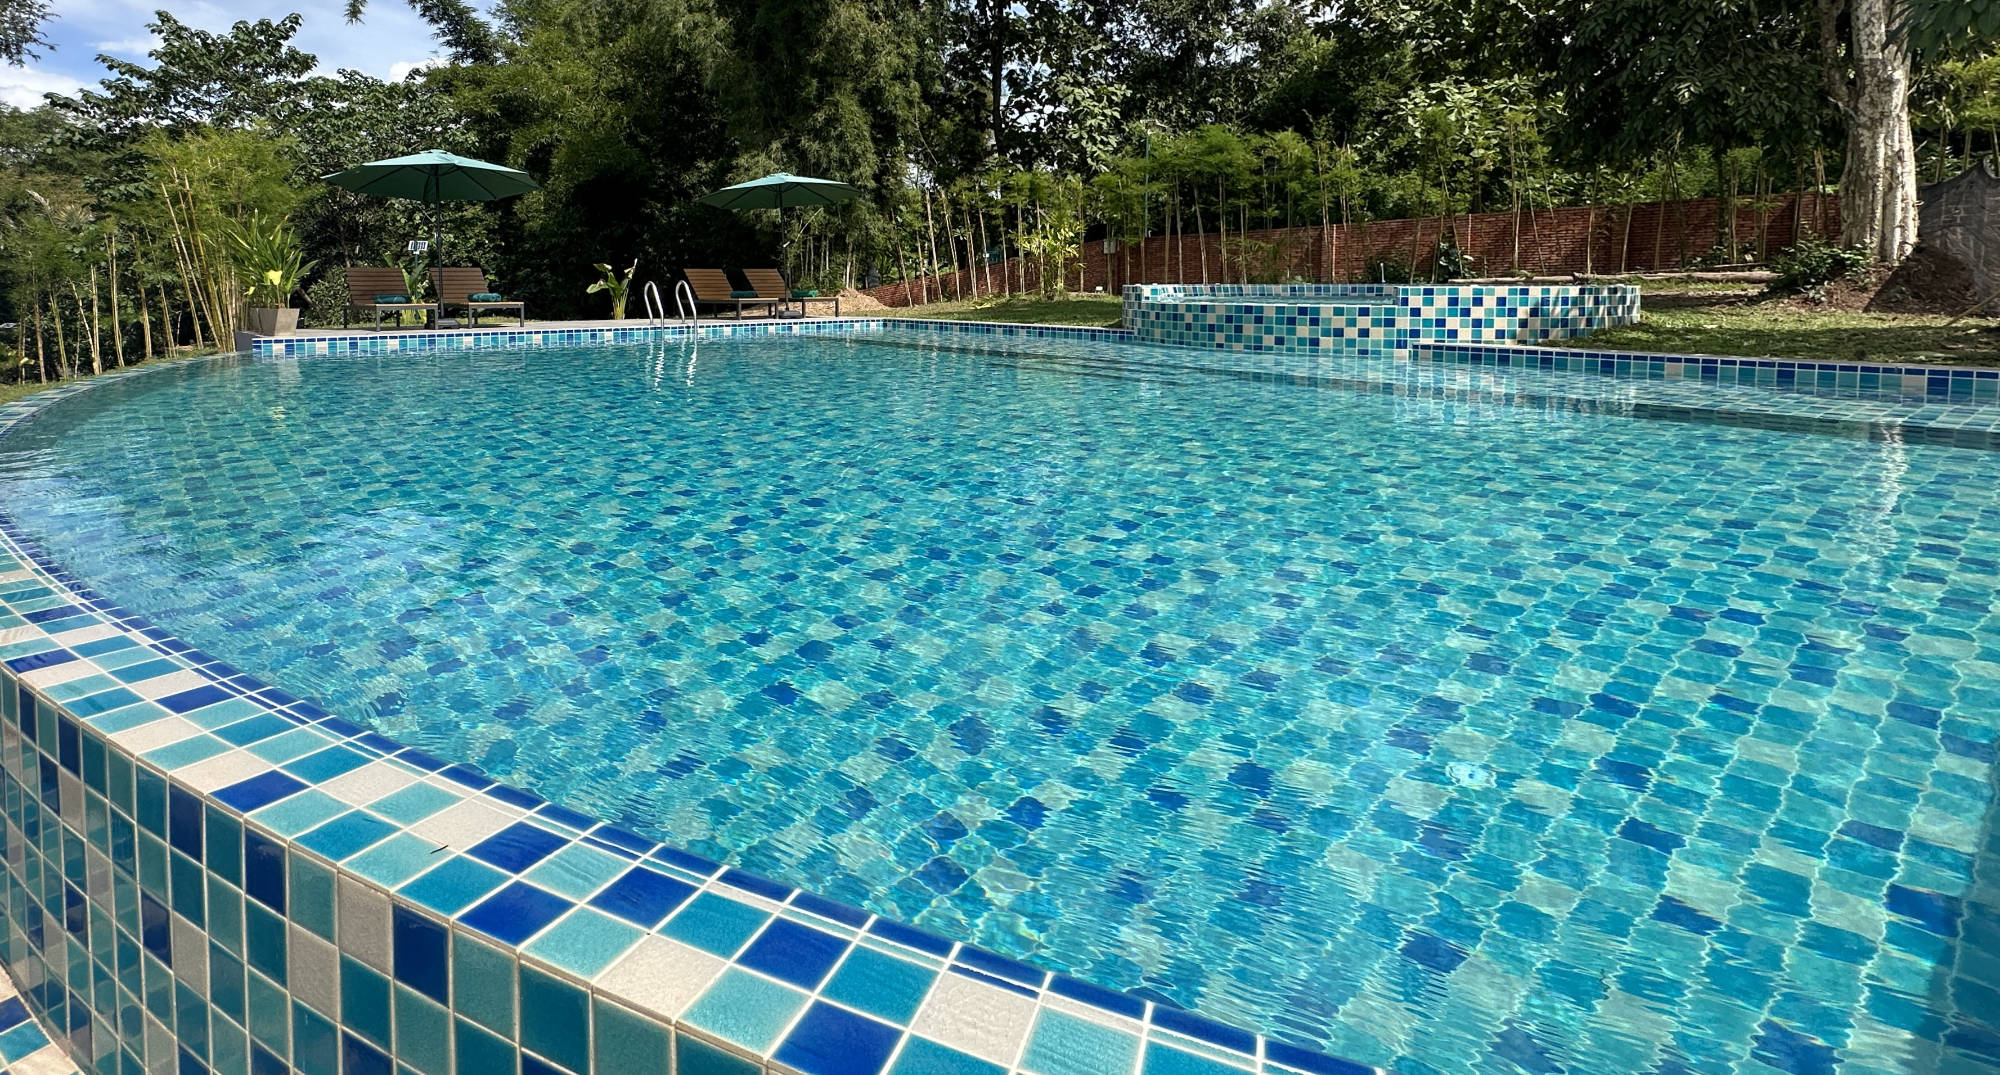 A Luang Prabang swimming pool with a blue tiled border.